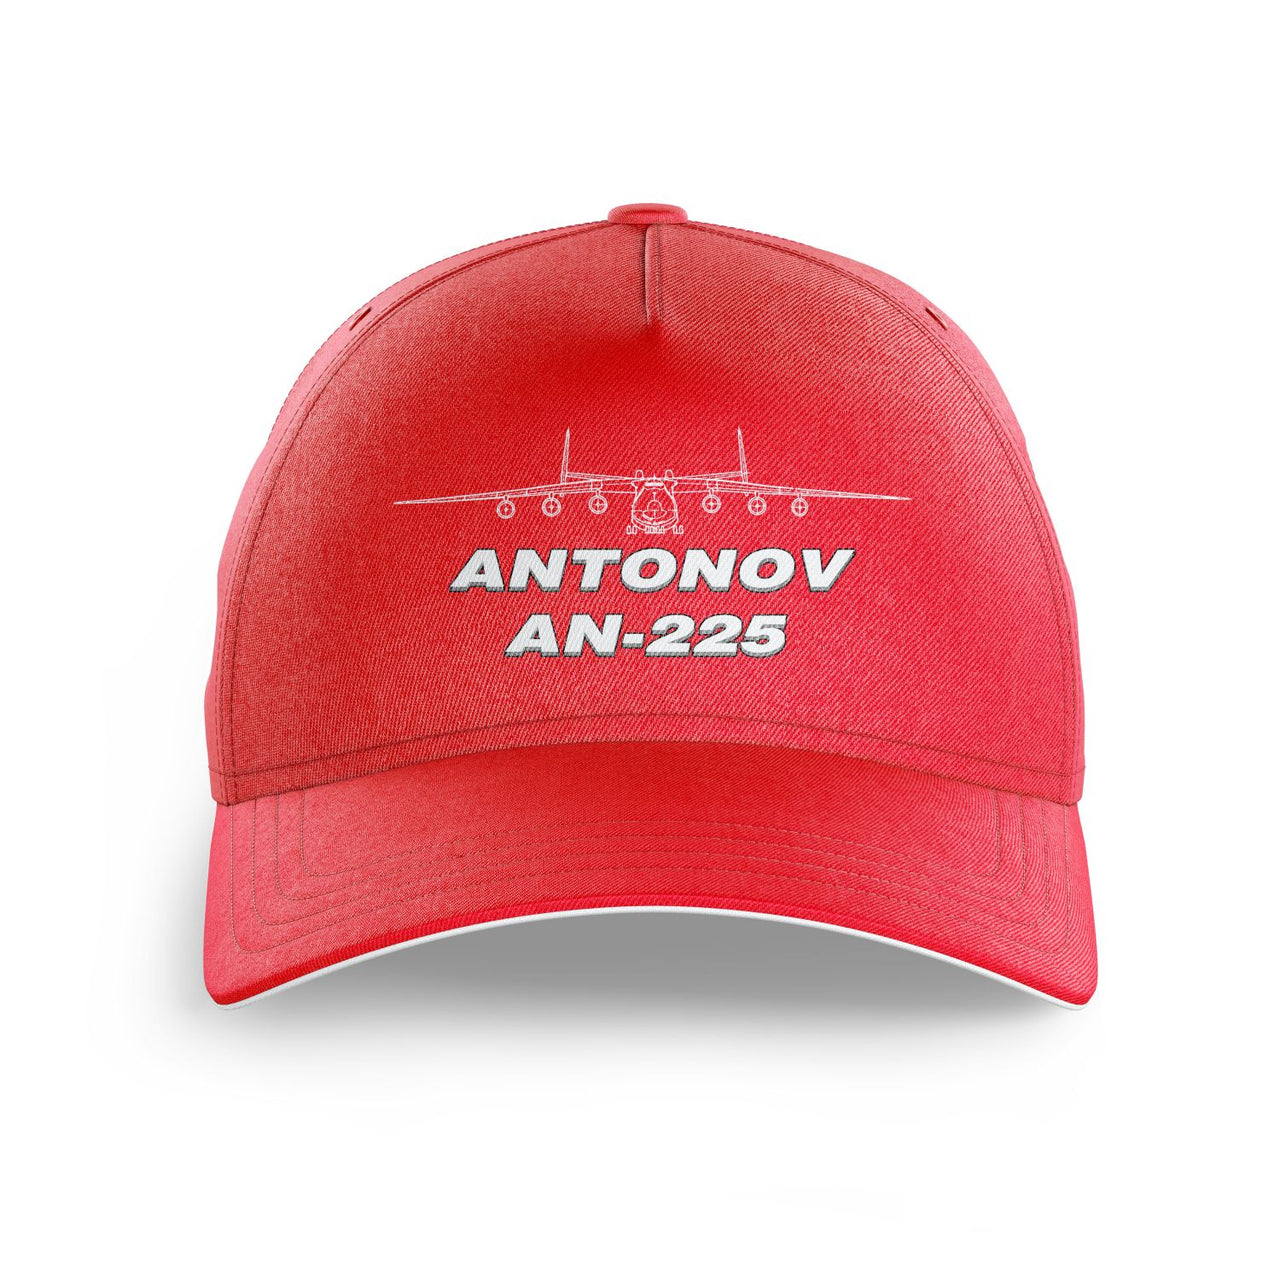 Antonov AN-225 (26) Printed Hats